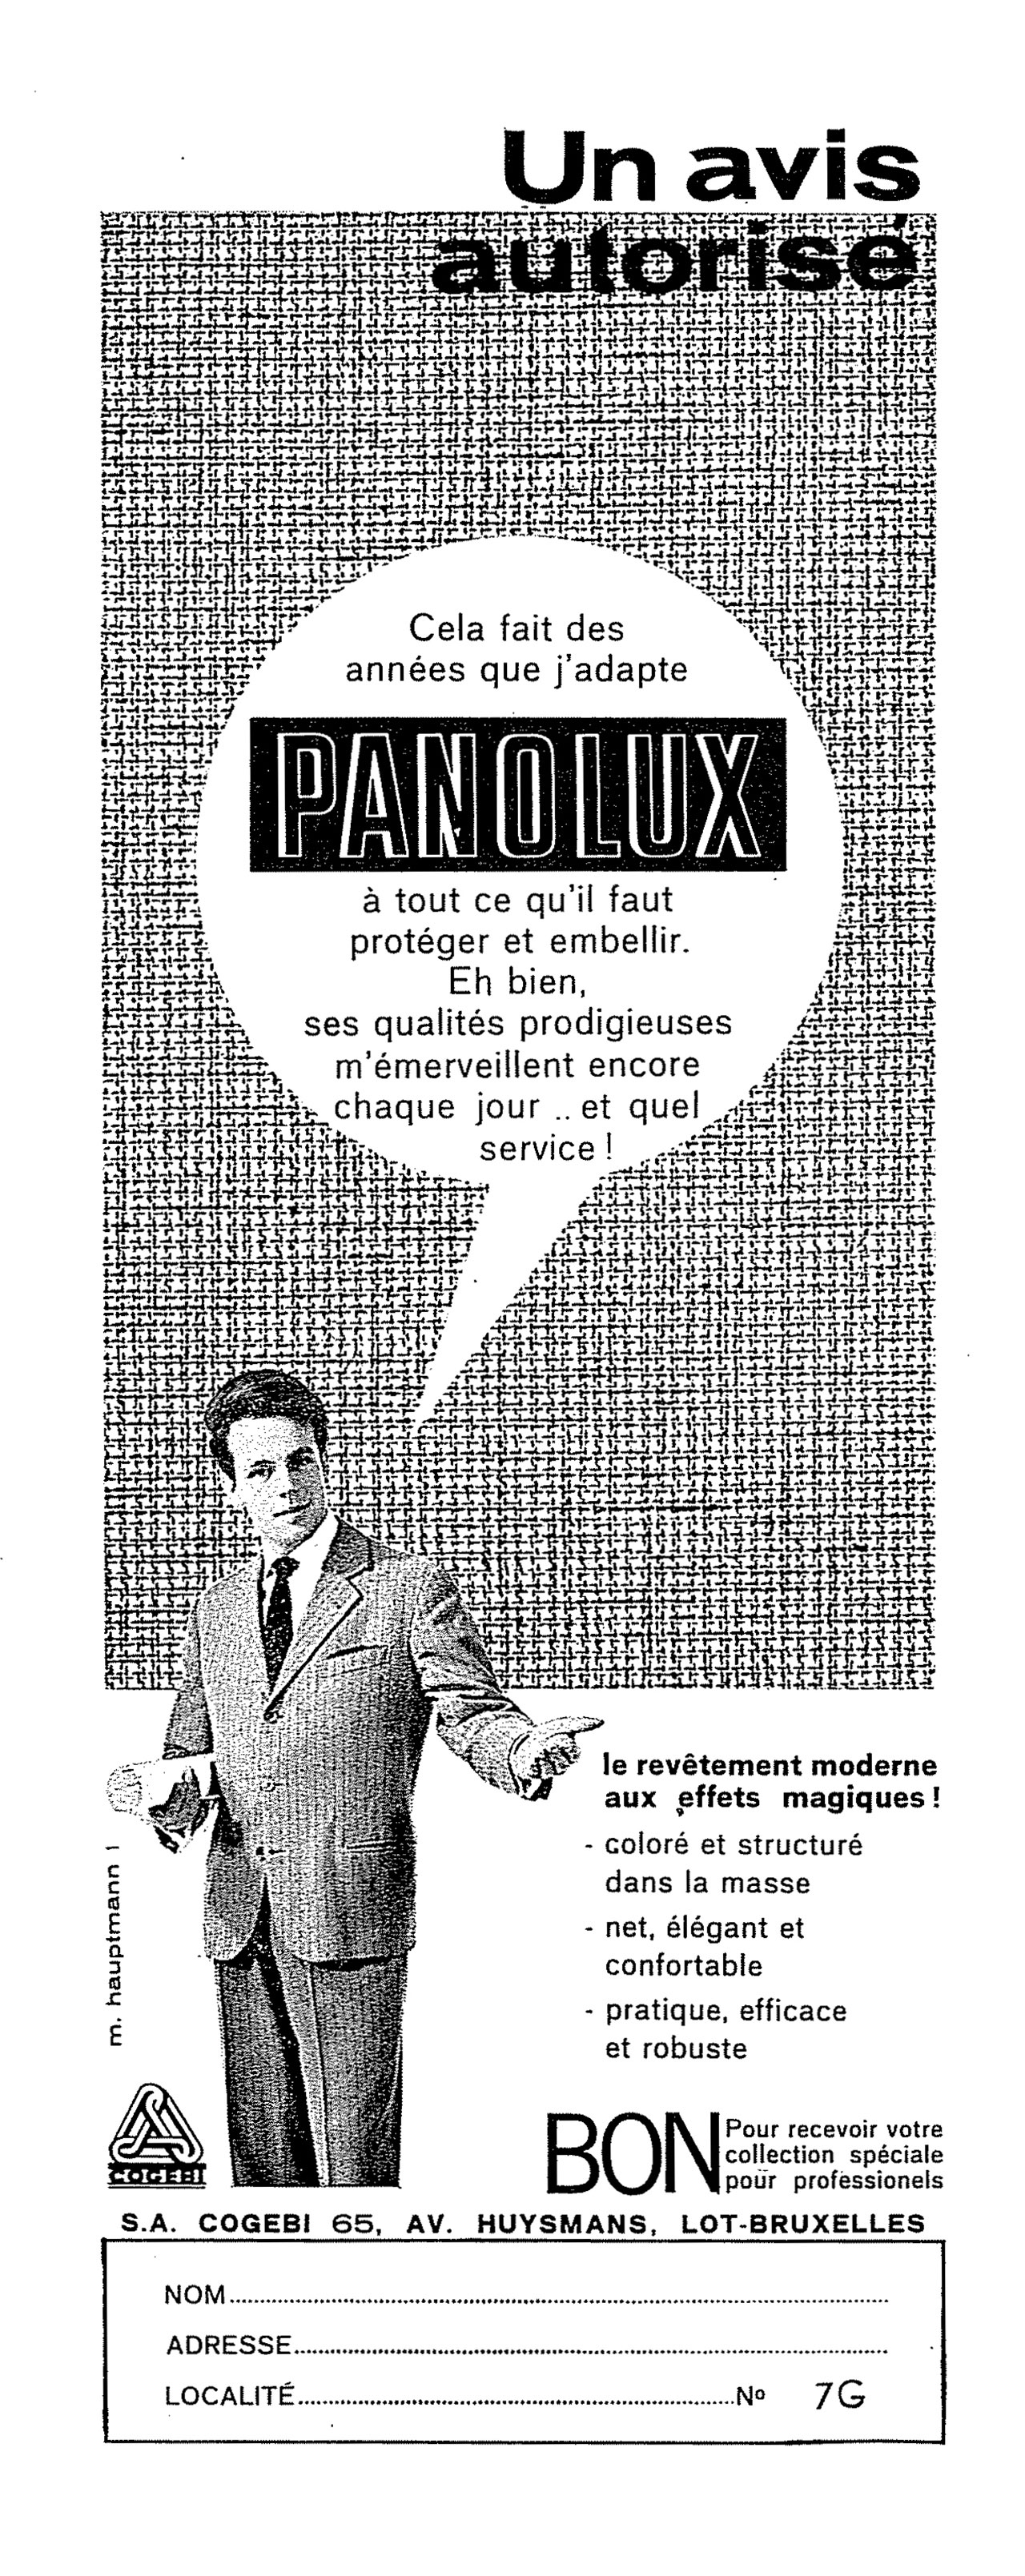 Panolux